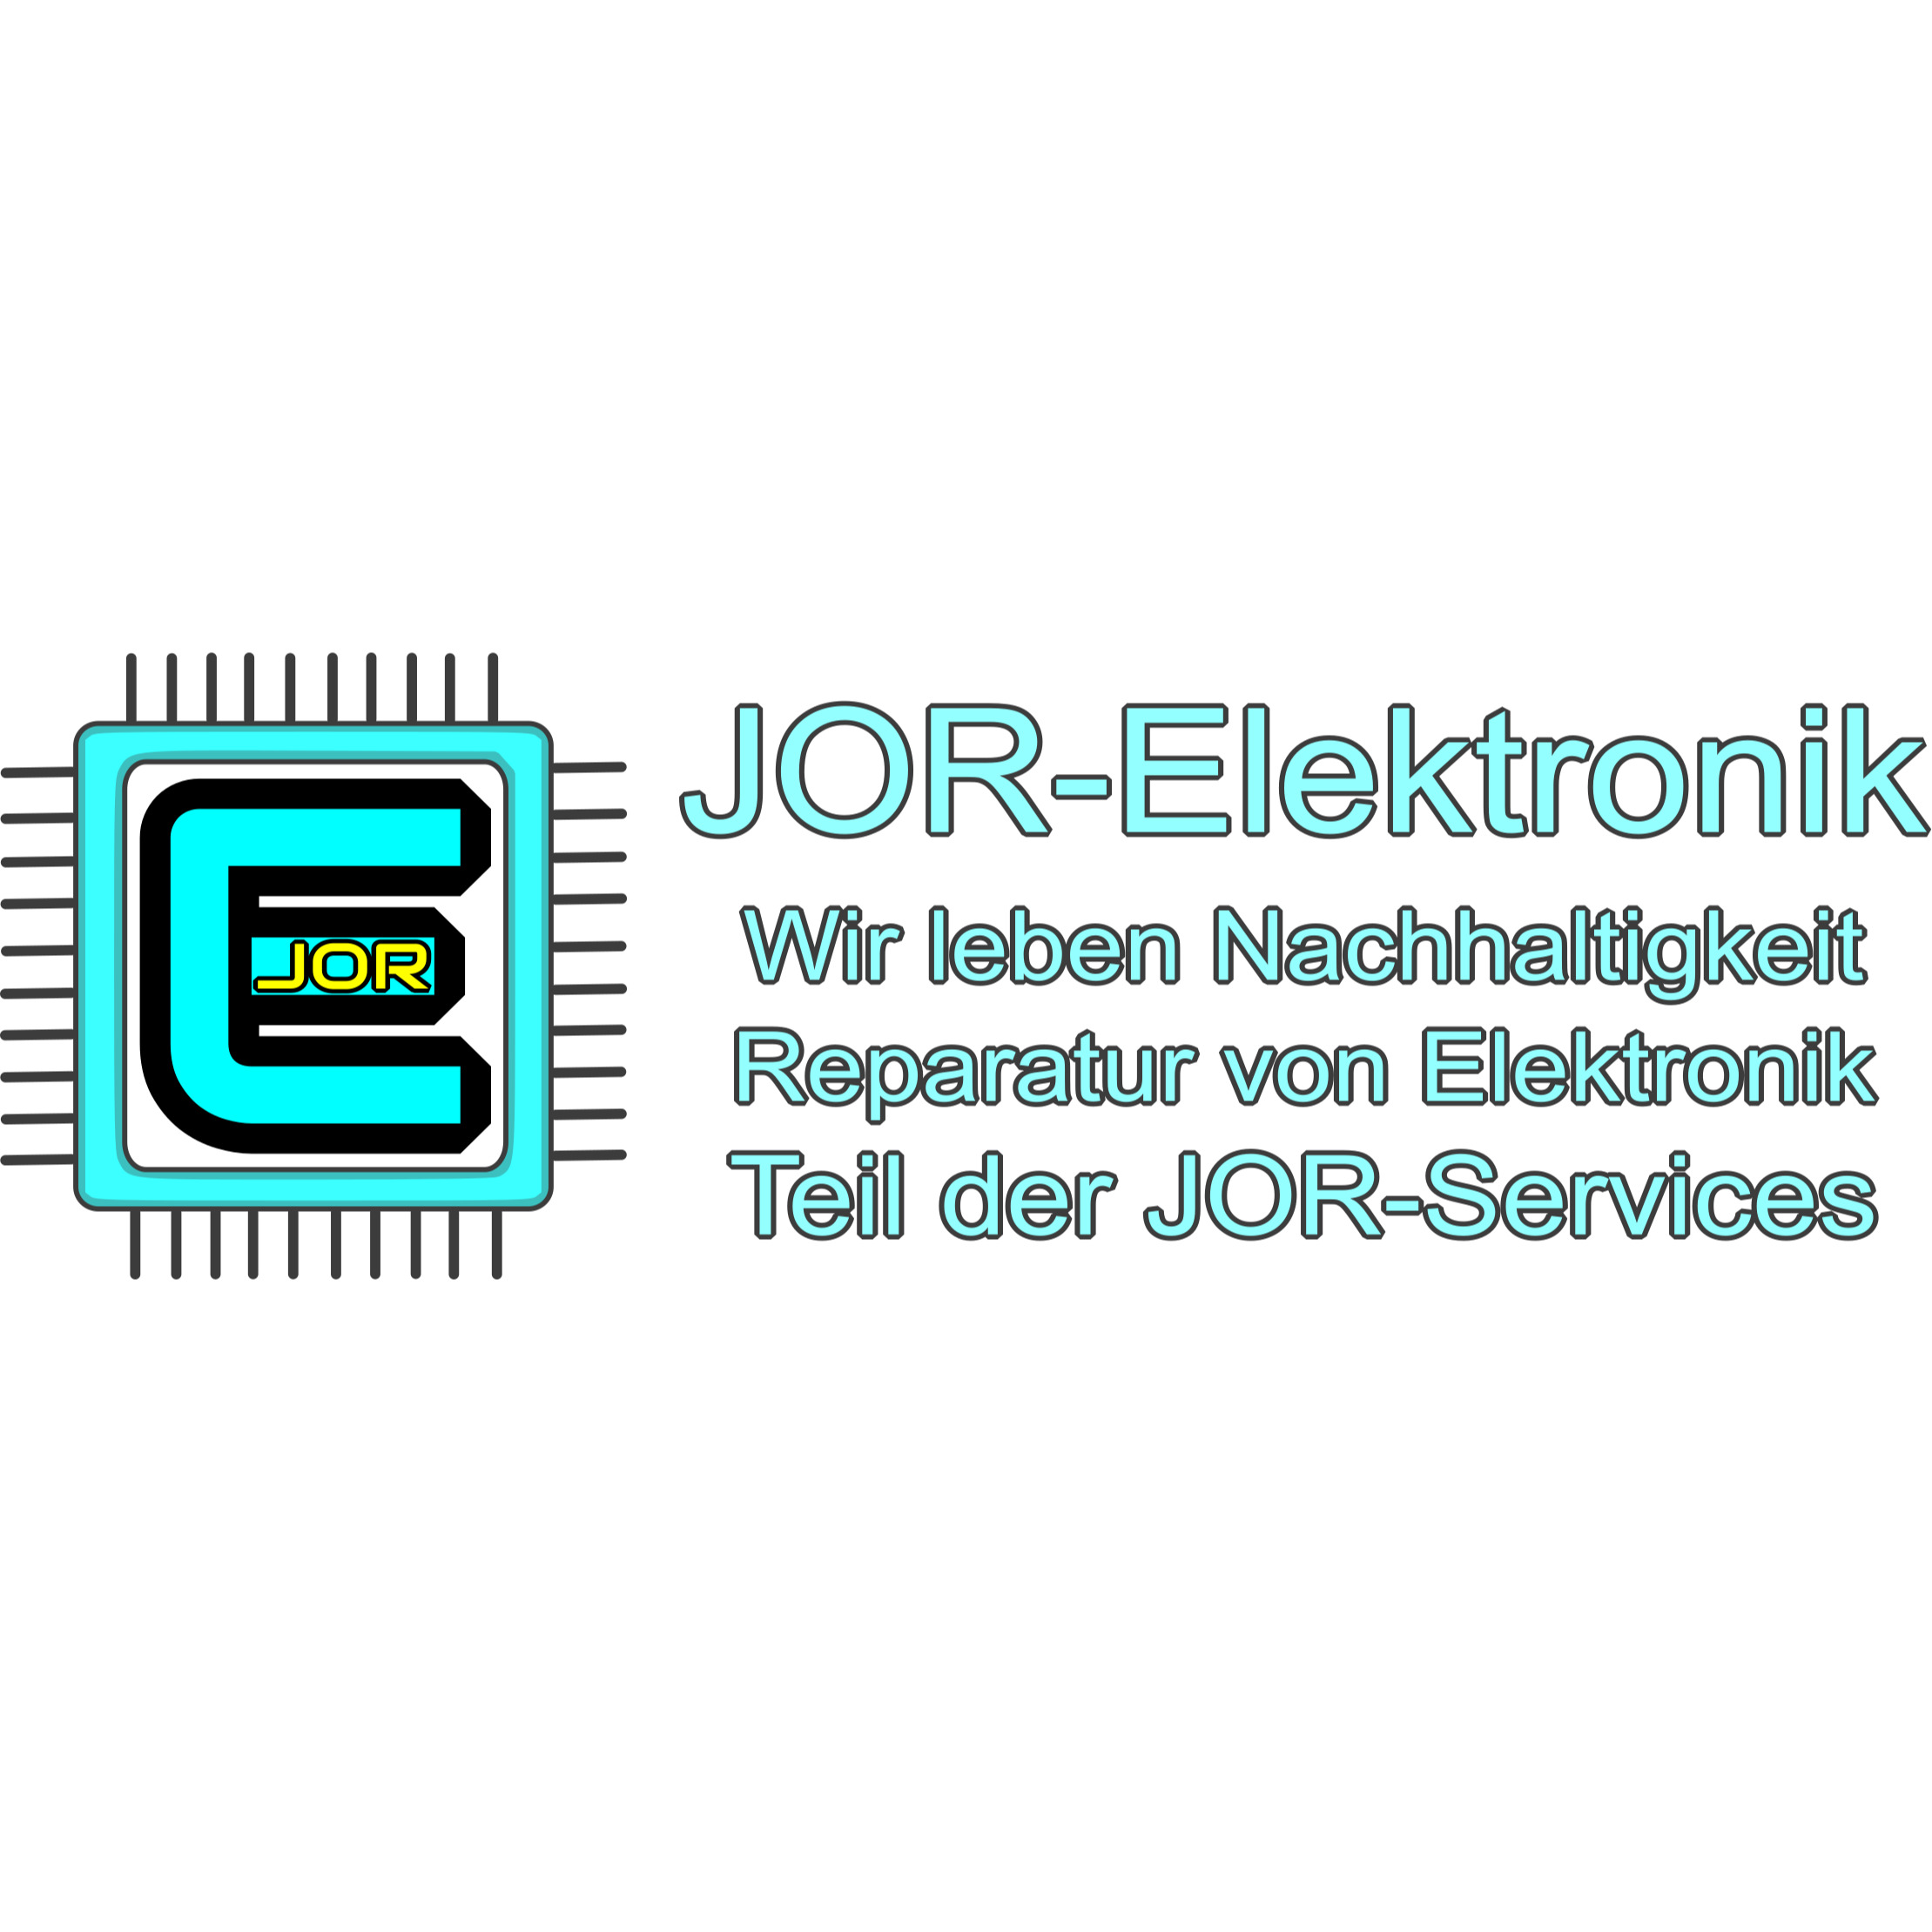 JOR-Elektronik Jens-Oliver-Rittaler in Köln - Logo